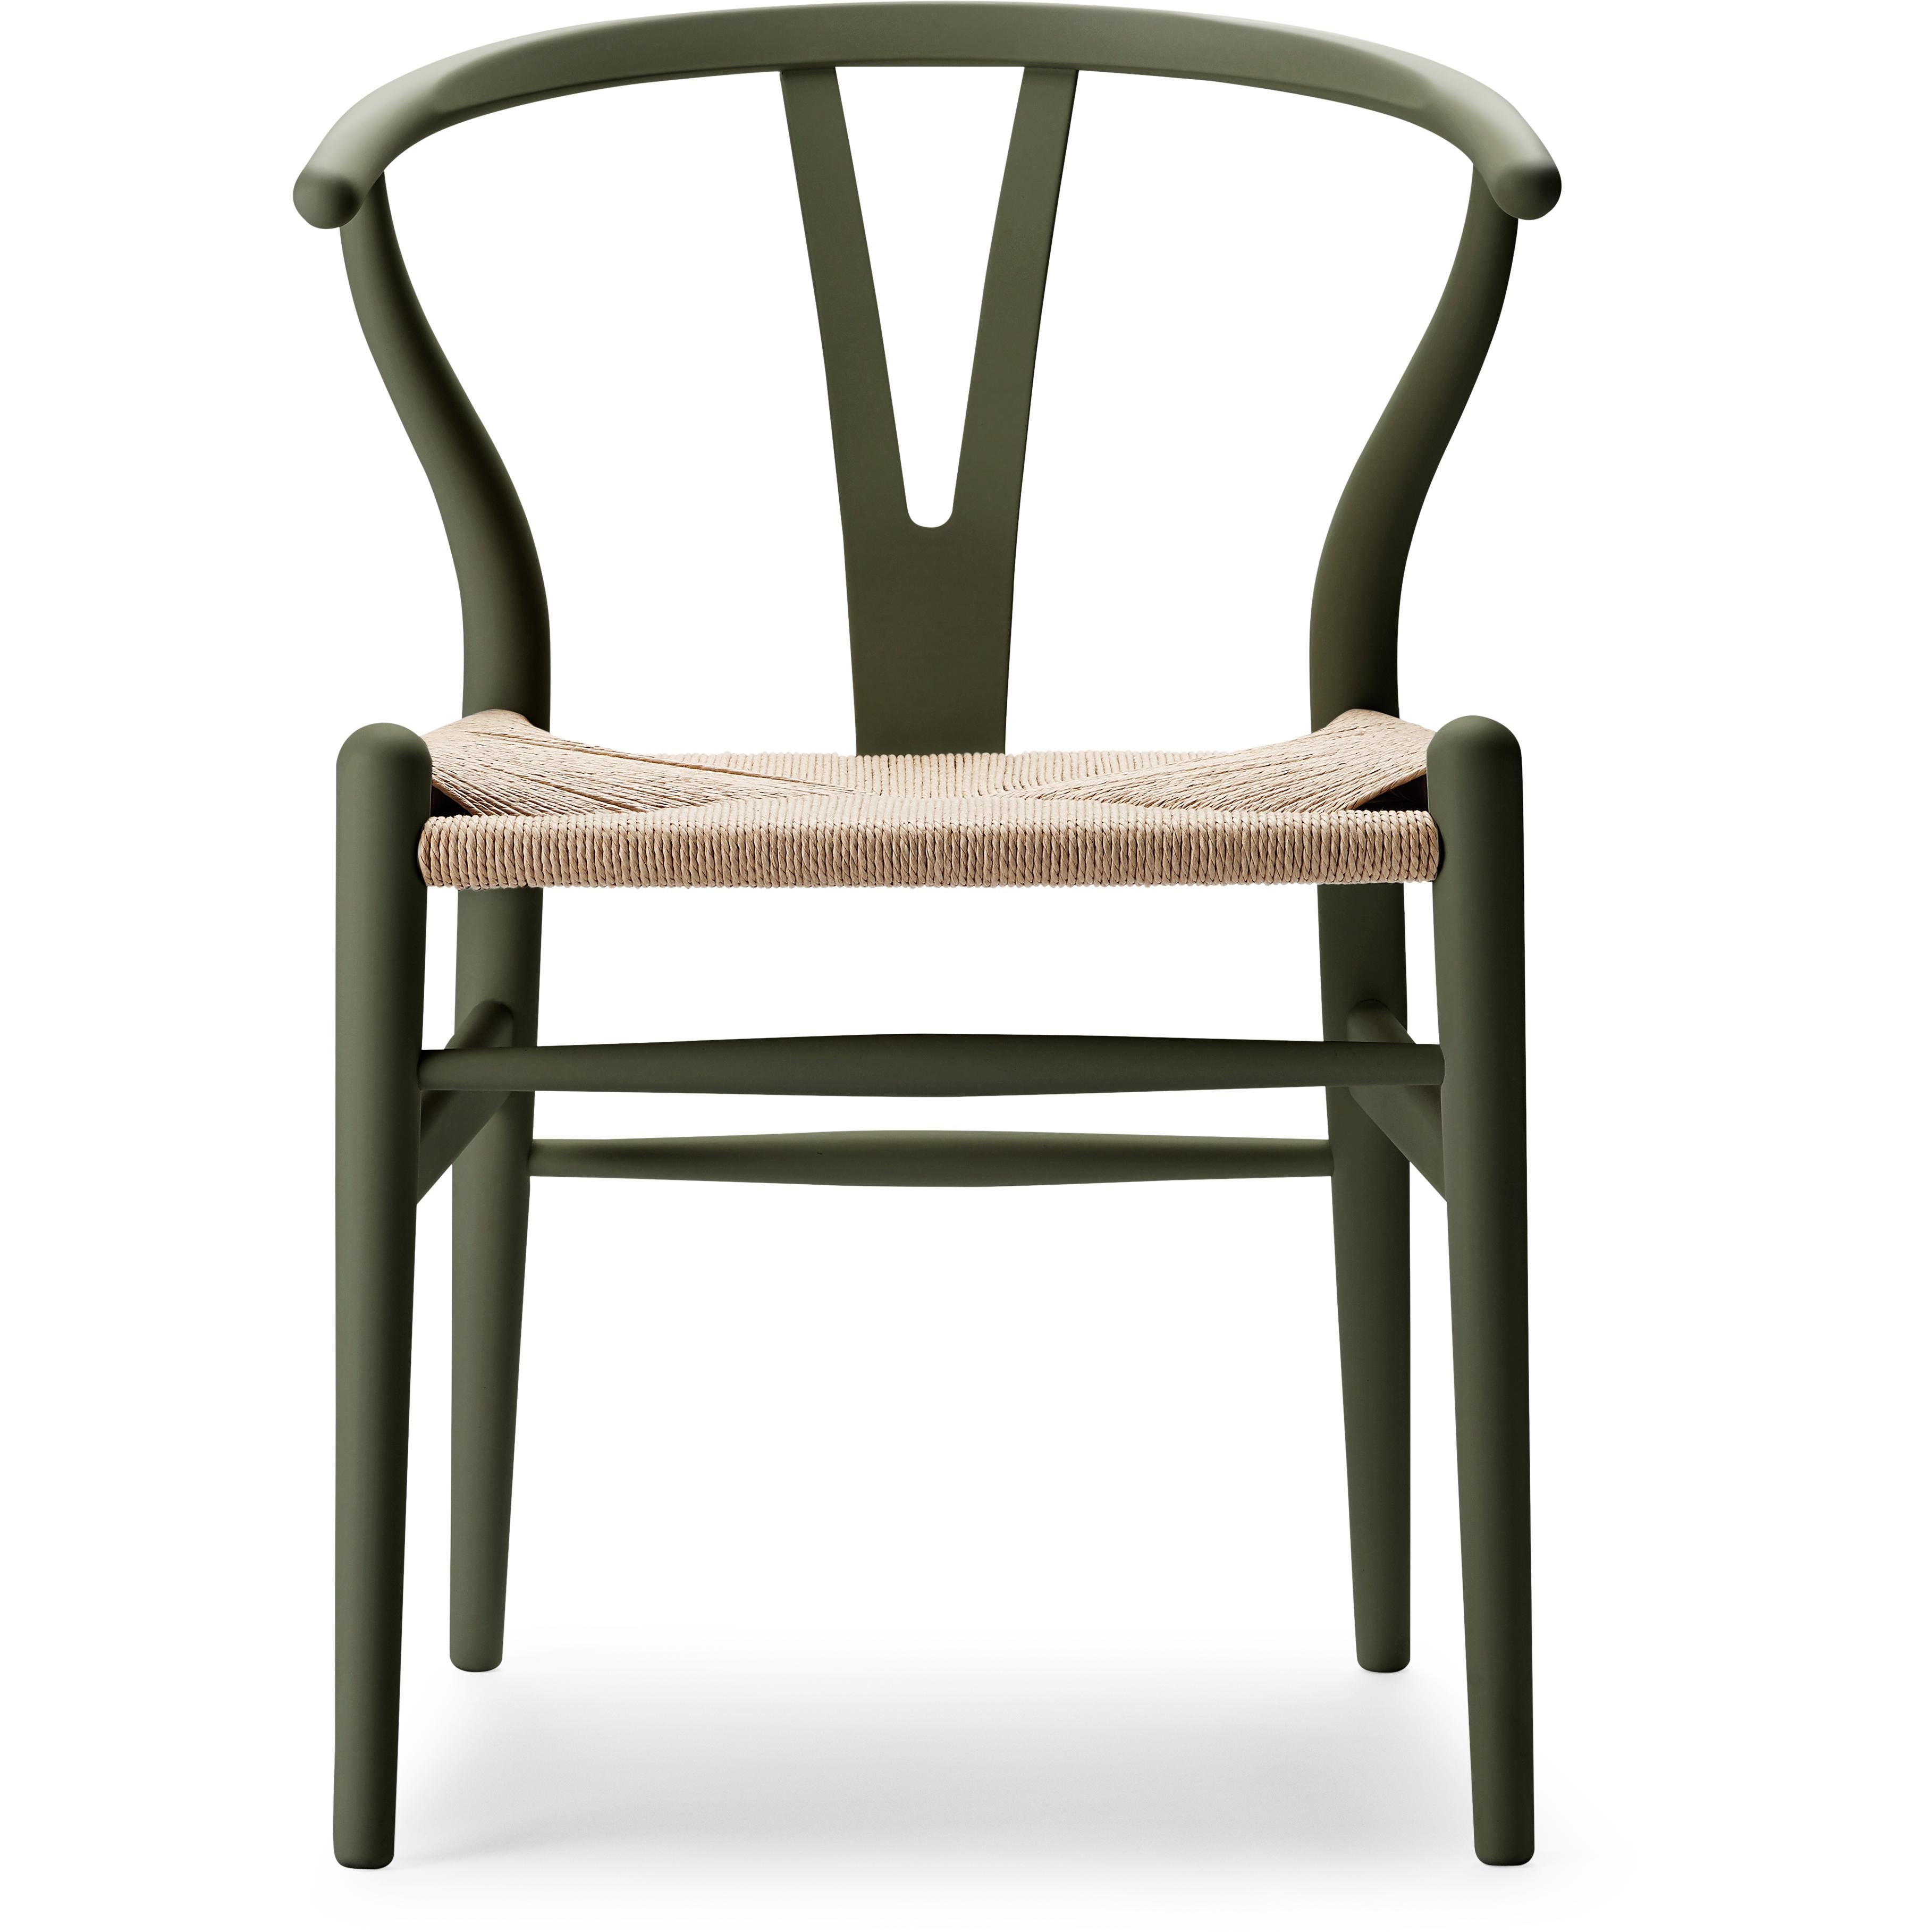 Carl Hansen CH24 Wishbone Chair Chair Special Edition, přírodní/měkká mořská řasa